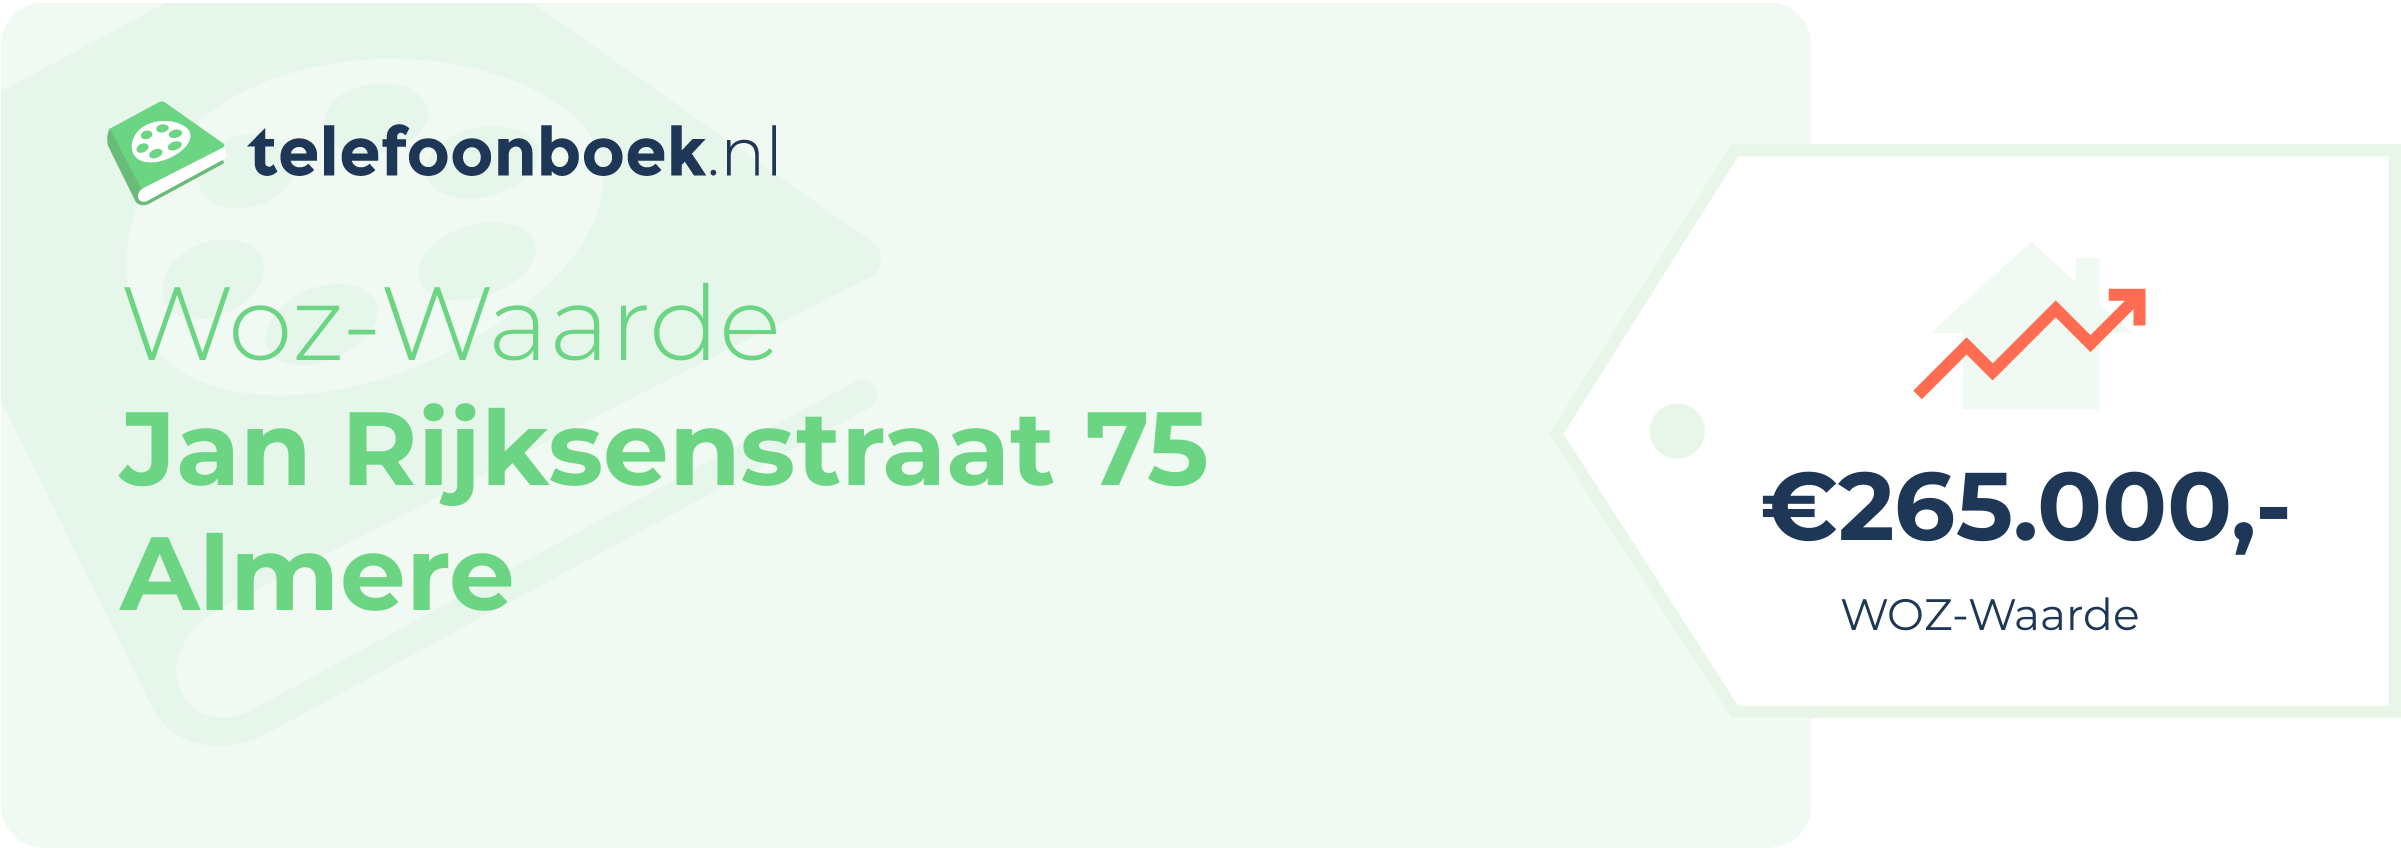 WOZ-waarde Jan Rijksenstraat 75 Almere